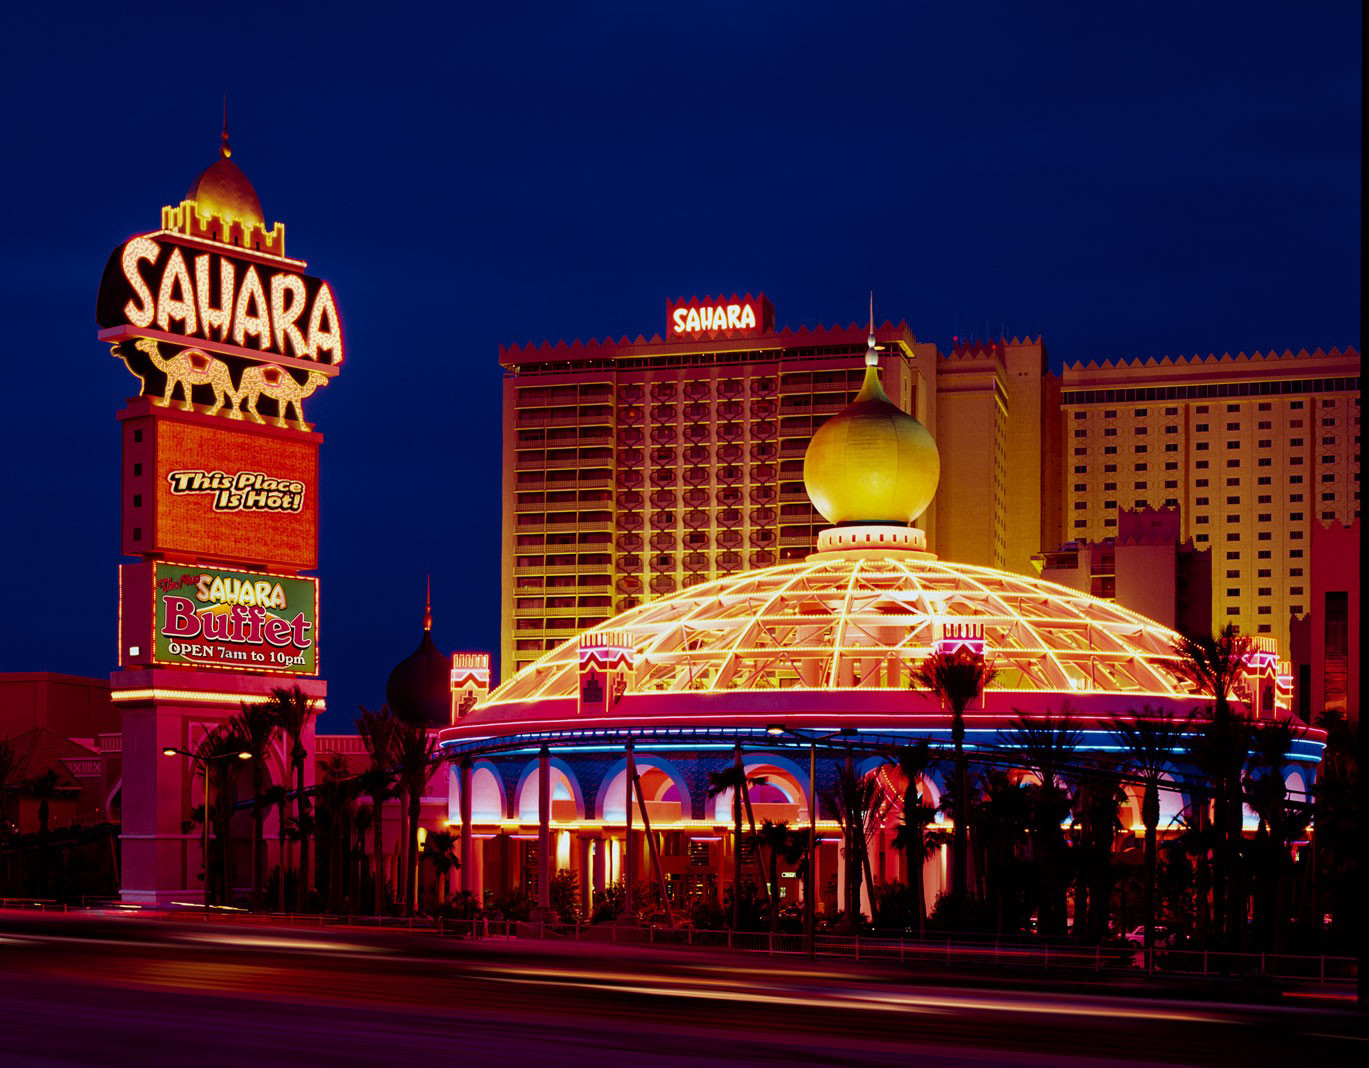 Where is the Sahara Hotel in Las Vegas?